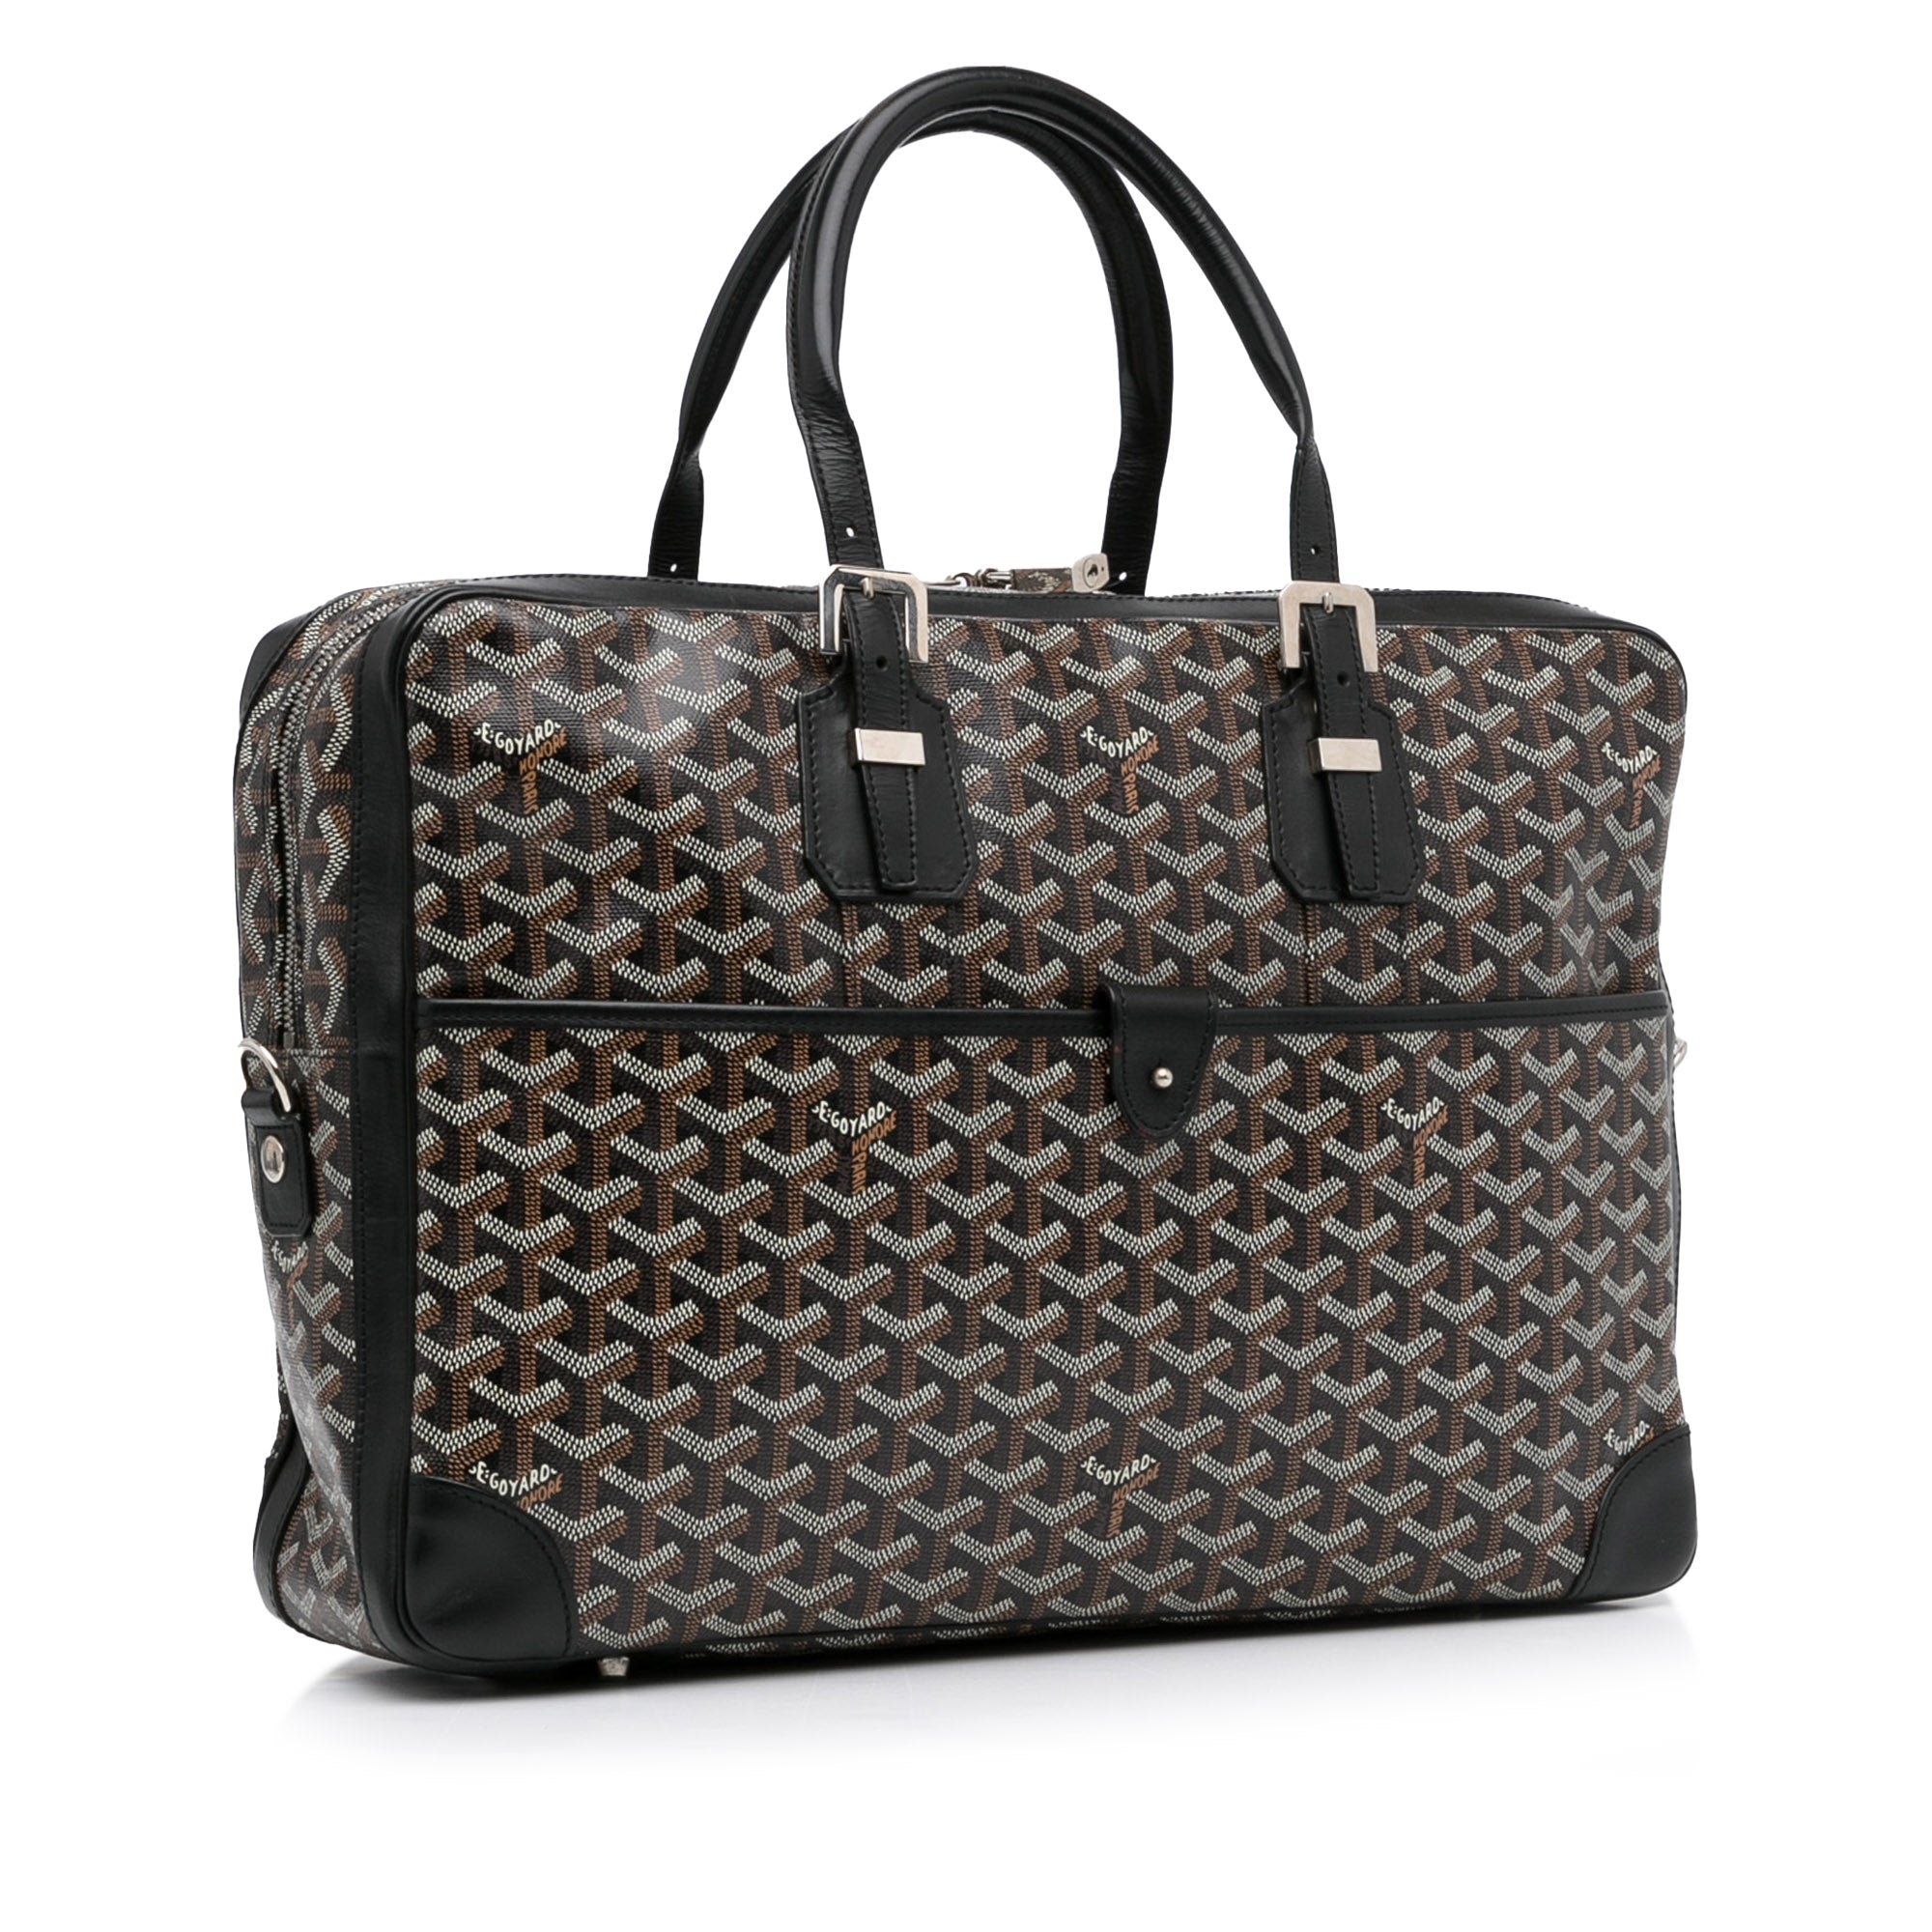 Goyard Travel bag for women  Buy or Sell your Designer bags